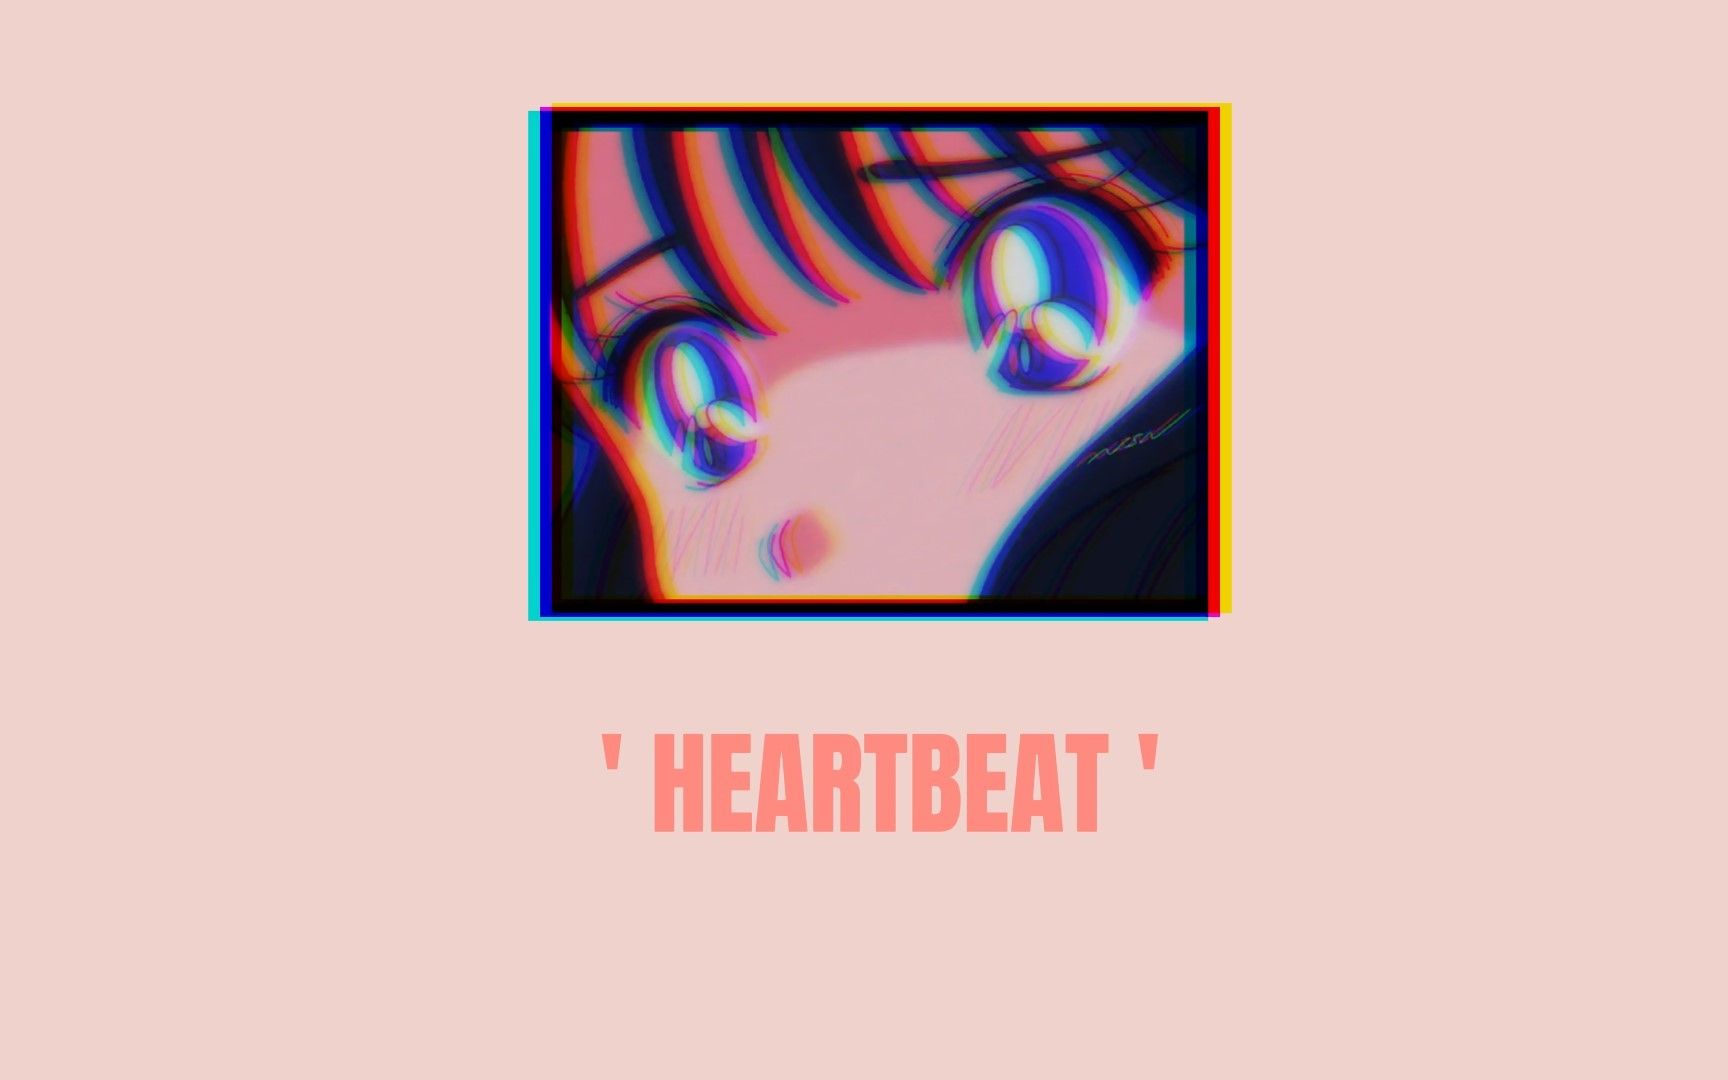 【Trap×R&B】快来感受“浪漫嘻哈”风格的Beat | Trap×R&B Type Beat |'HEARTBEAT'♡